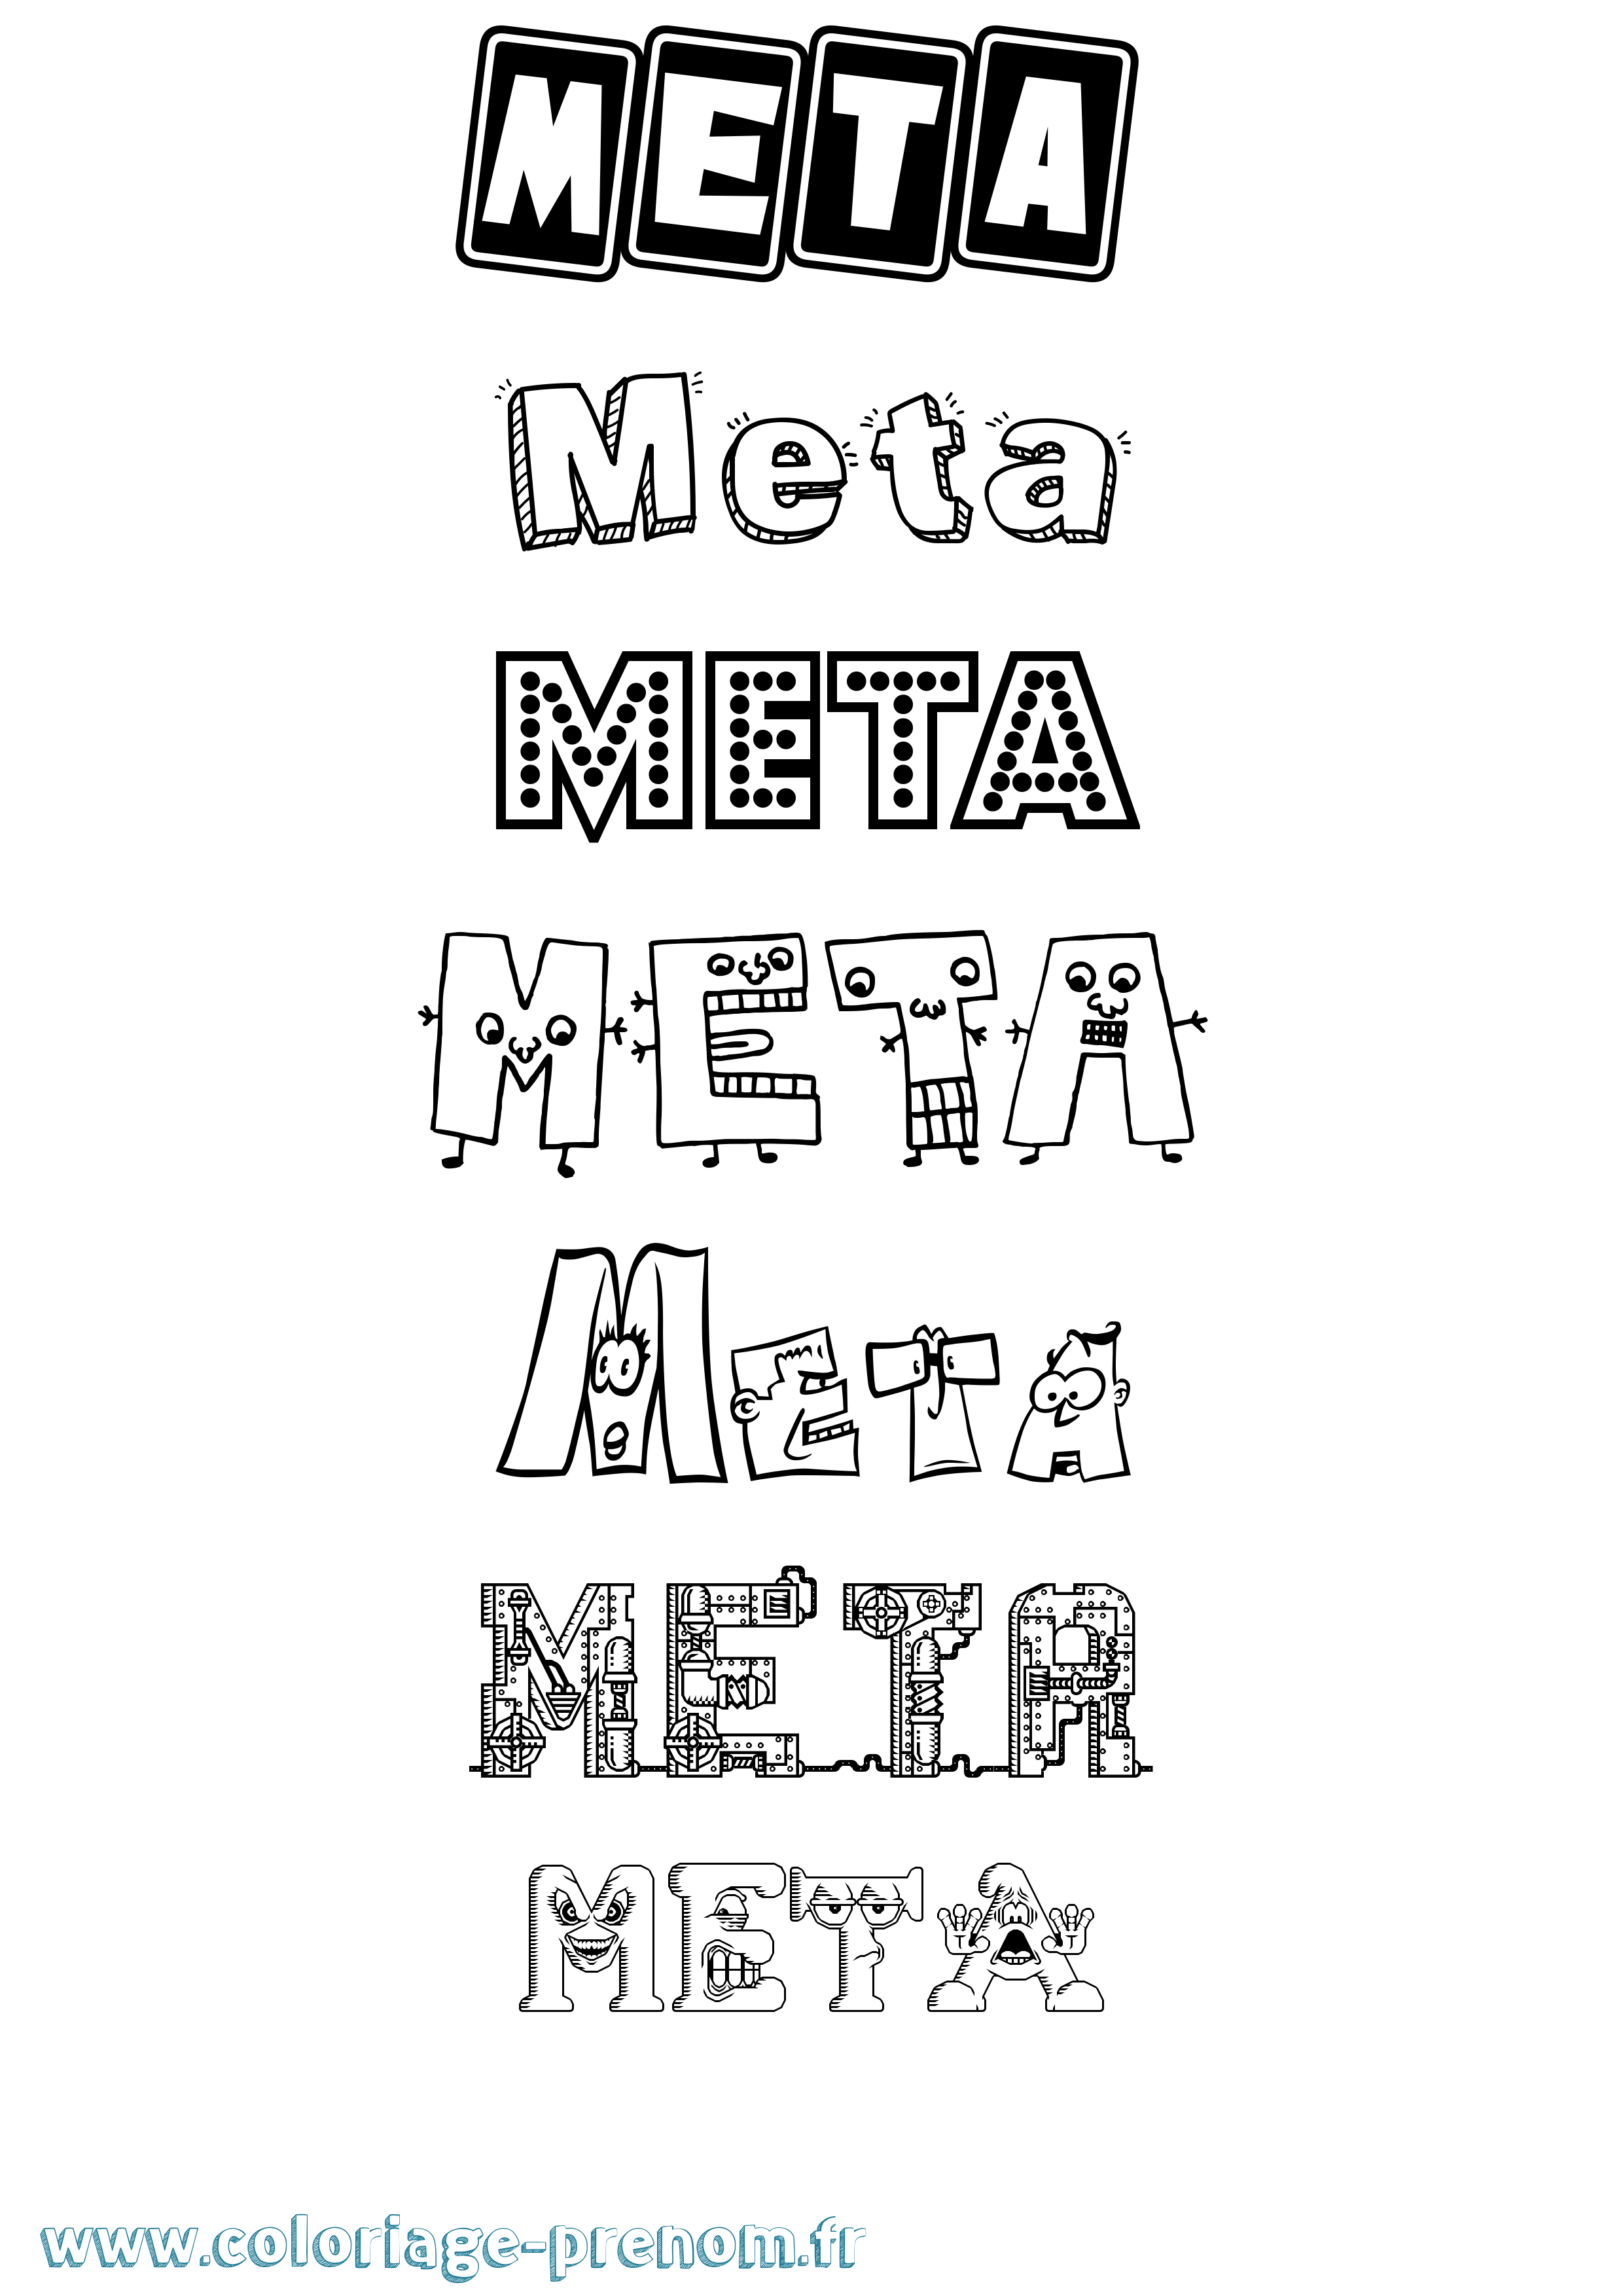 Coloriage prénom Meta Fun